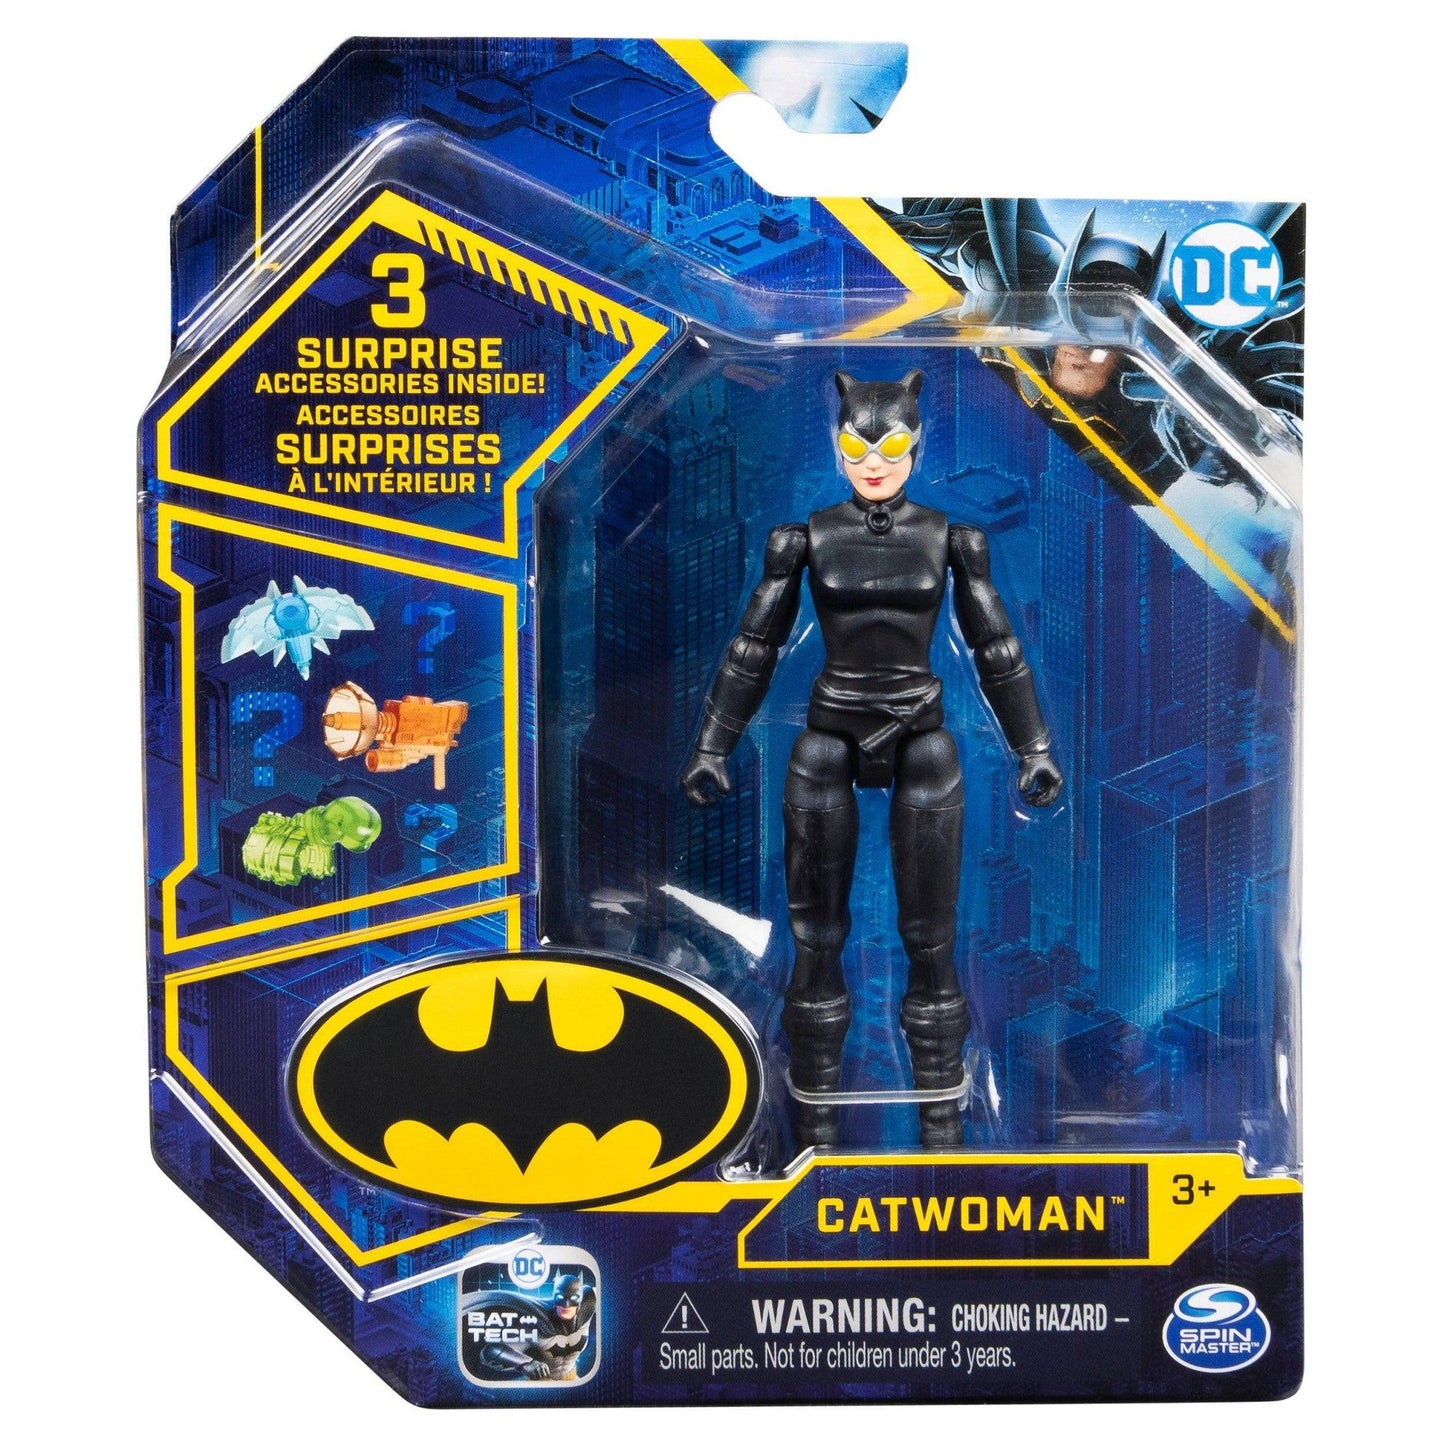 Batman: Bat-Tech 4" Action Figure with 3 Mystery Accessories Assortment